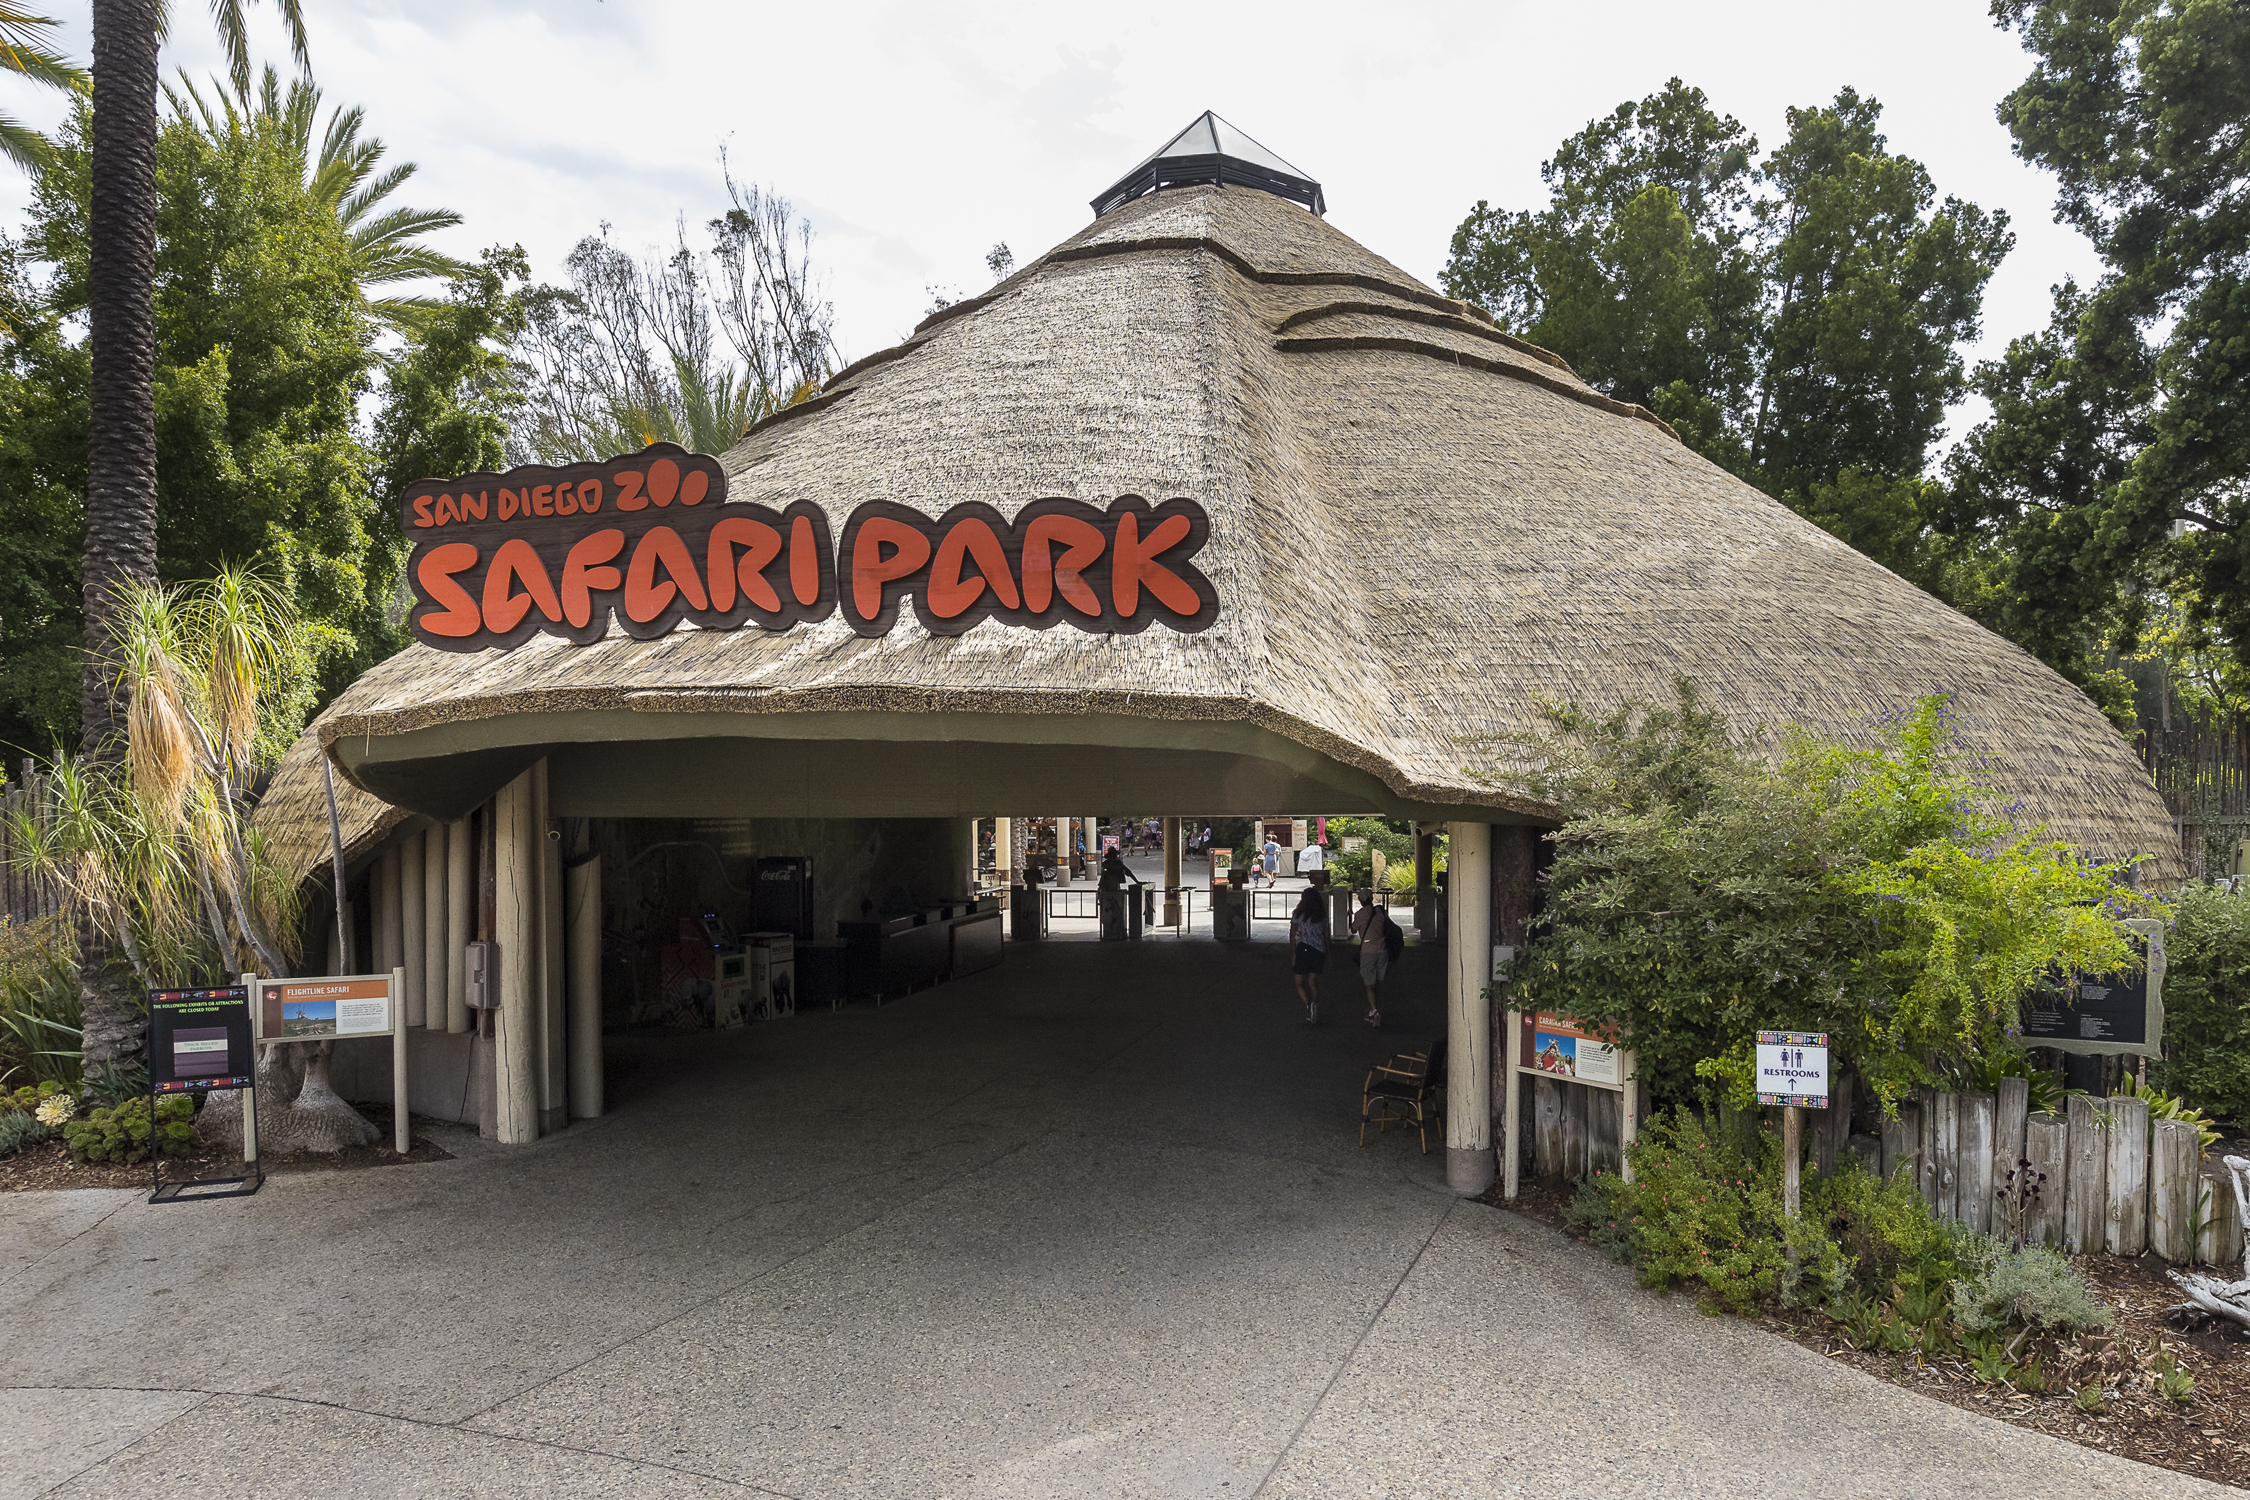 san diego zoo safari park bag policy